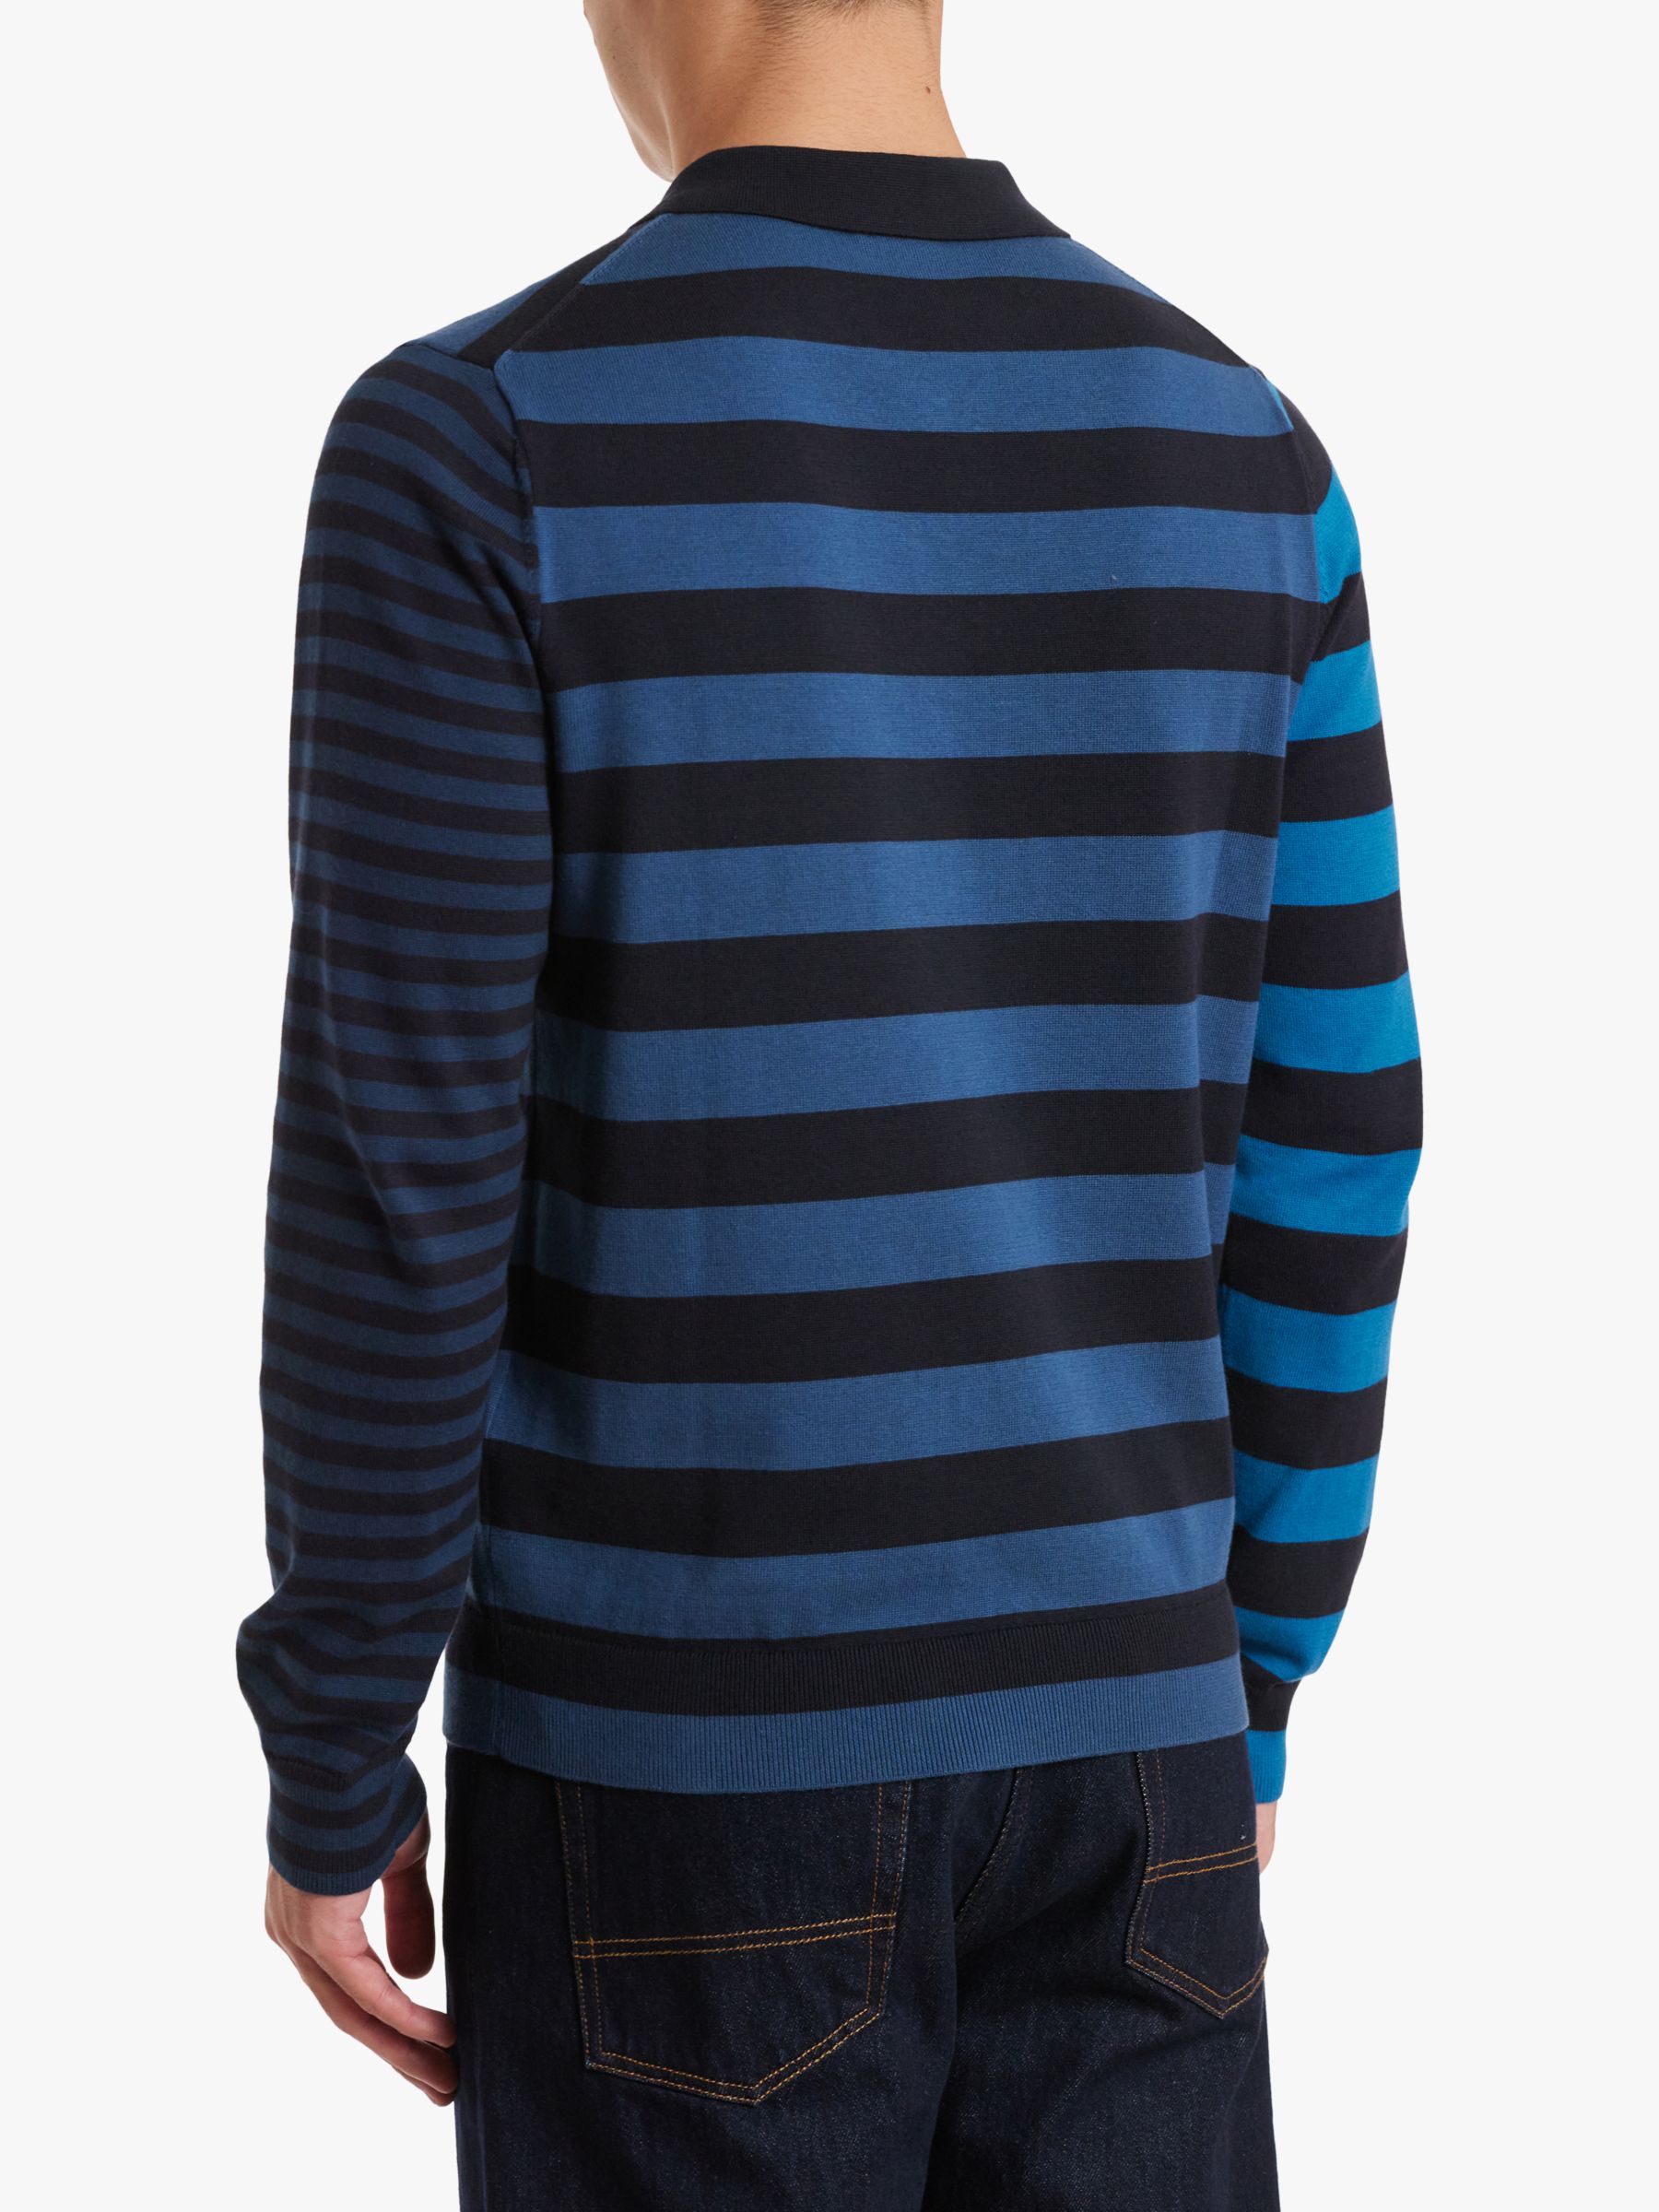 Paul Smith Organic Cotton Stripe Long Sleeve Polo Shirt, Blue, S